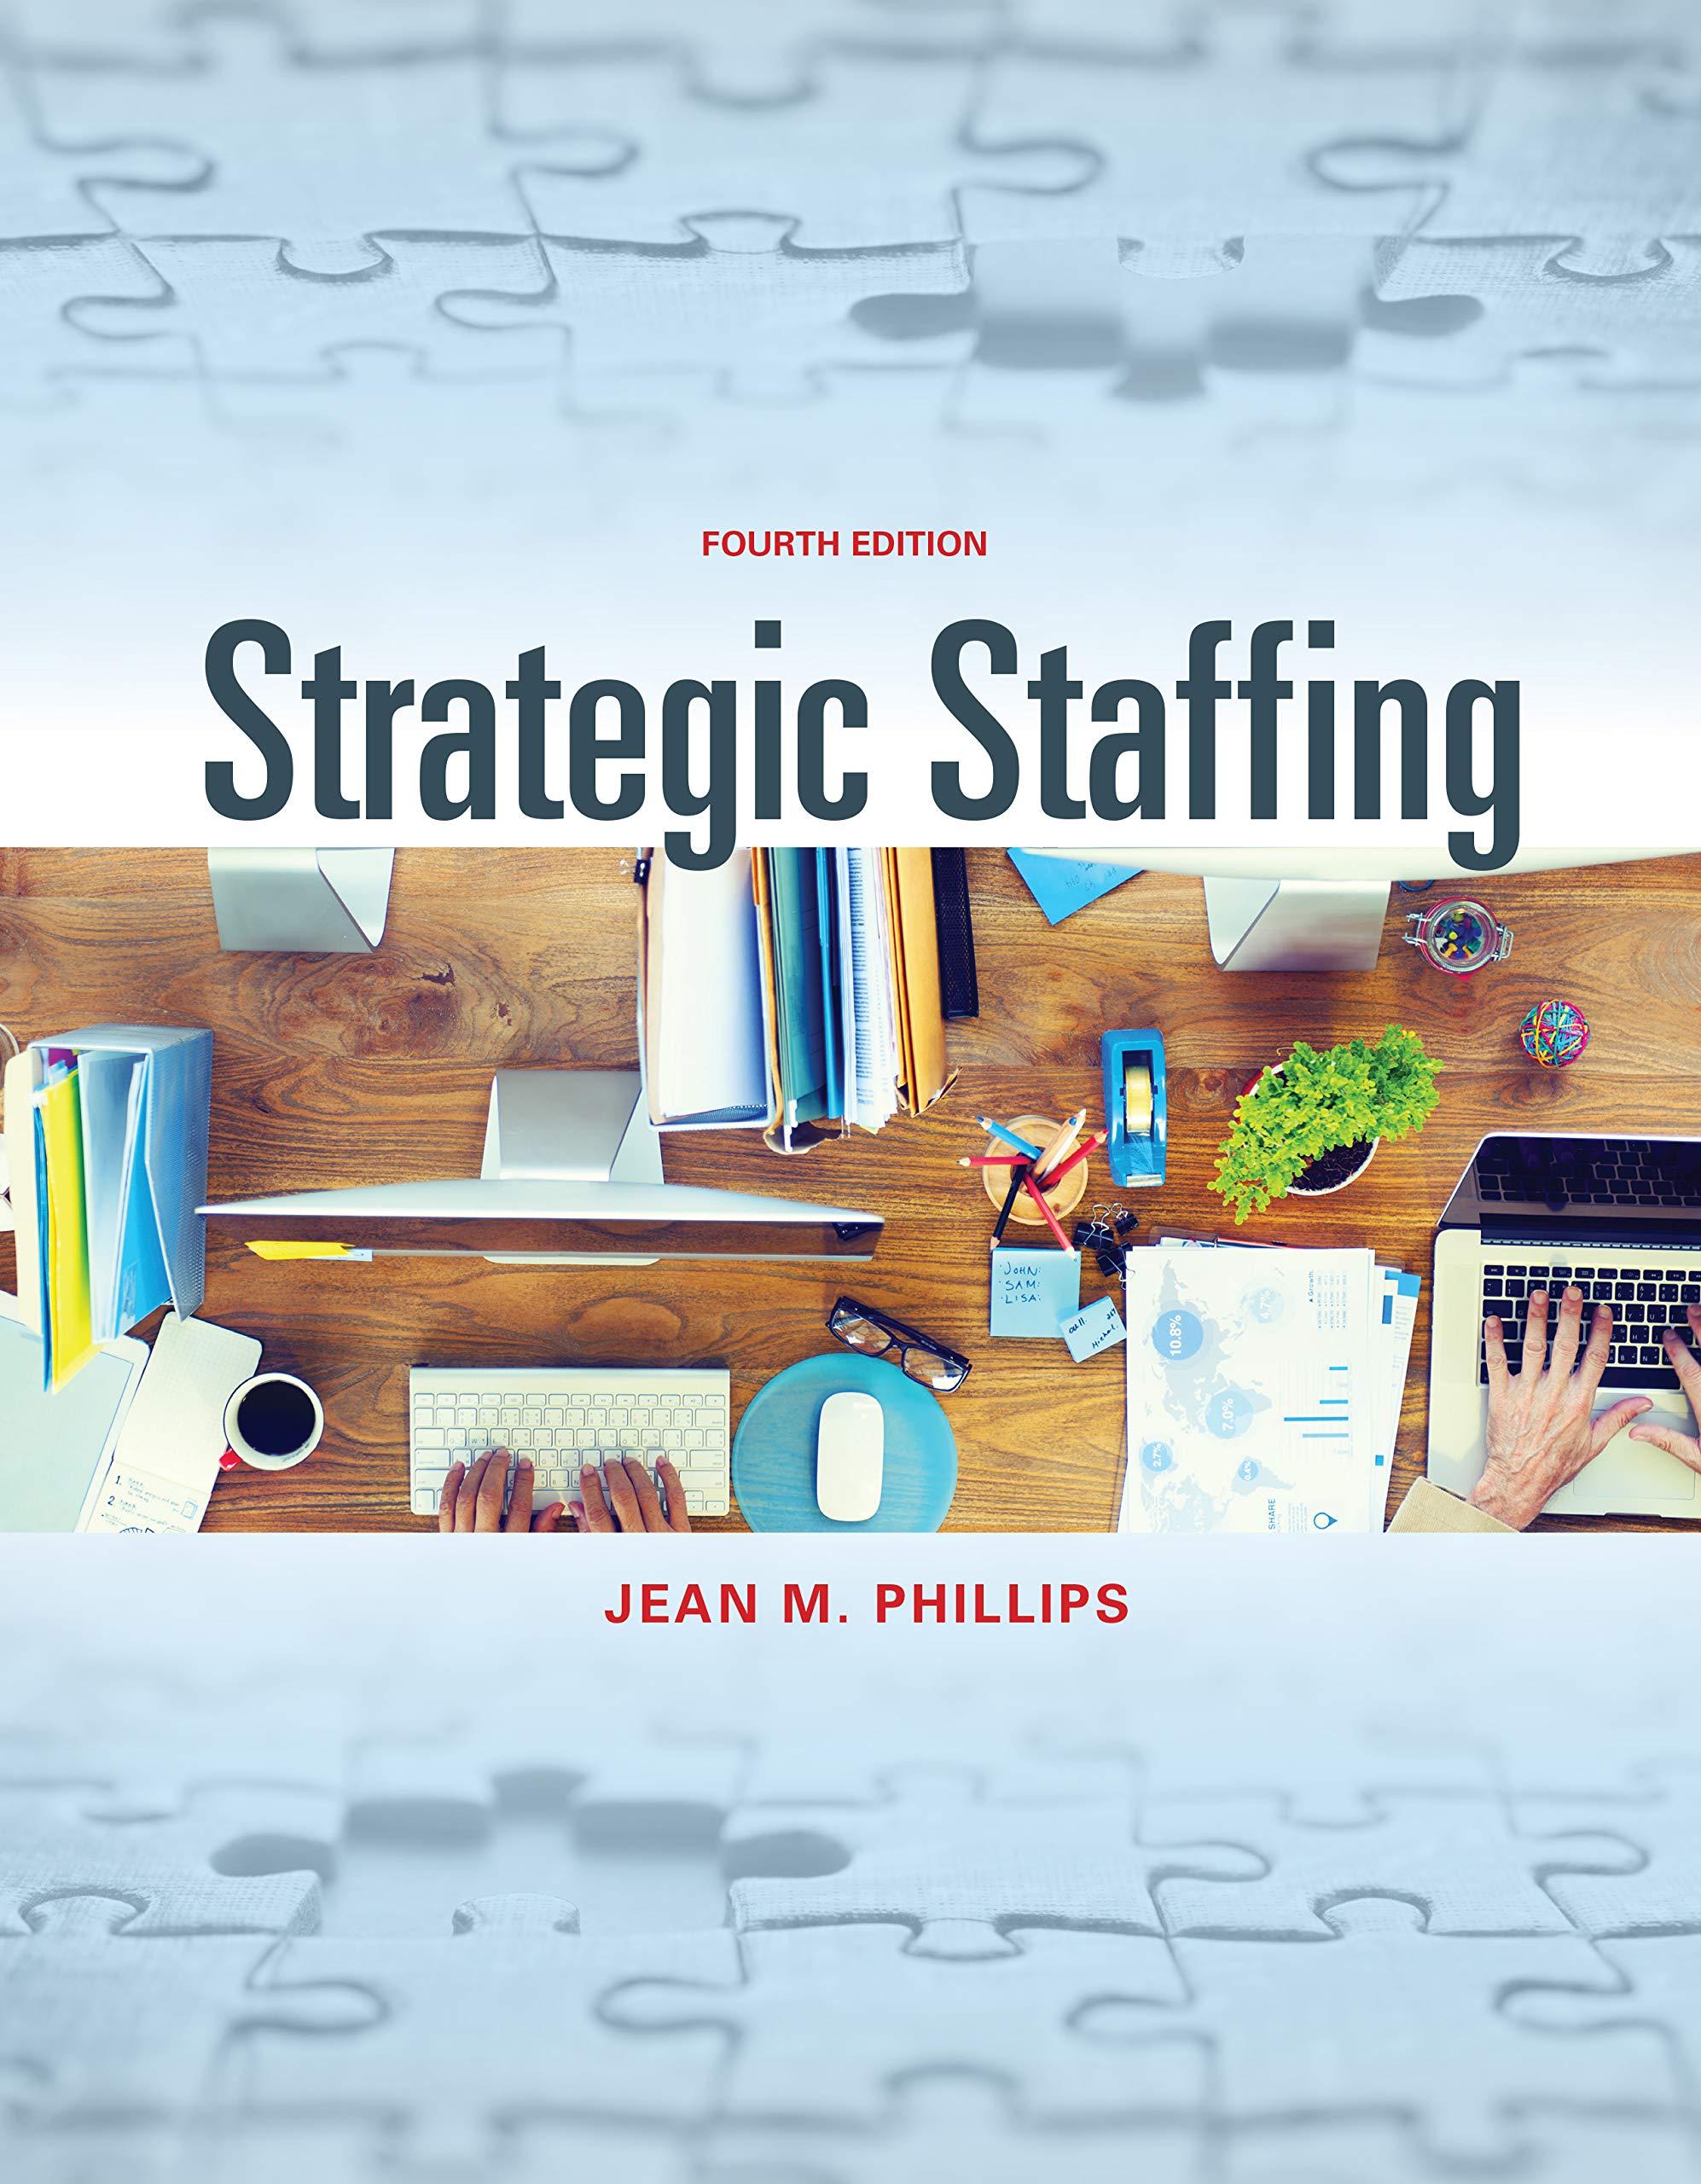 strategic staffing 4th edition jean m. phillips 1948426862, 978-1948426862